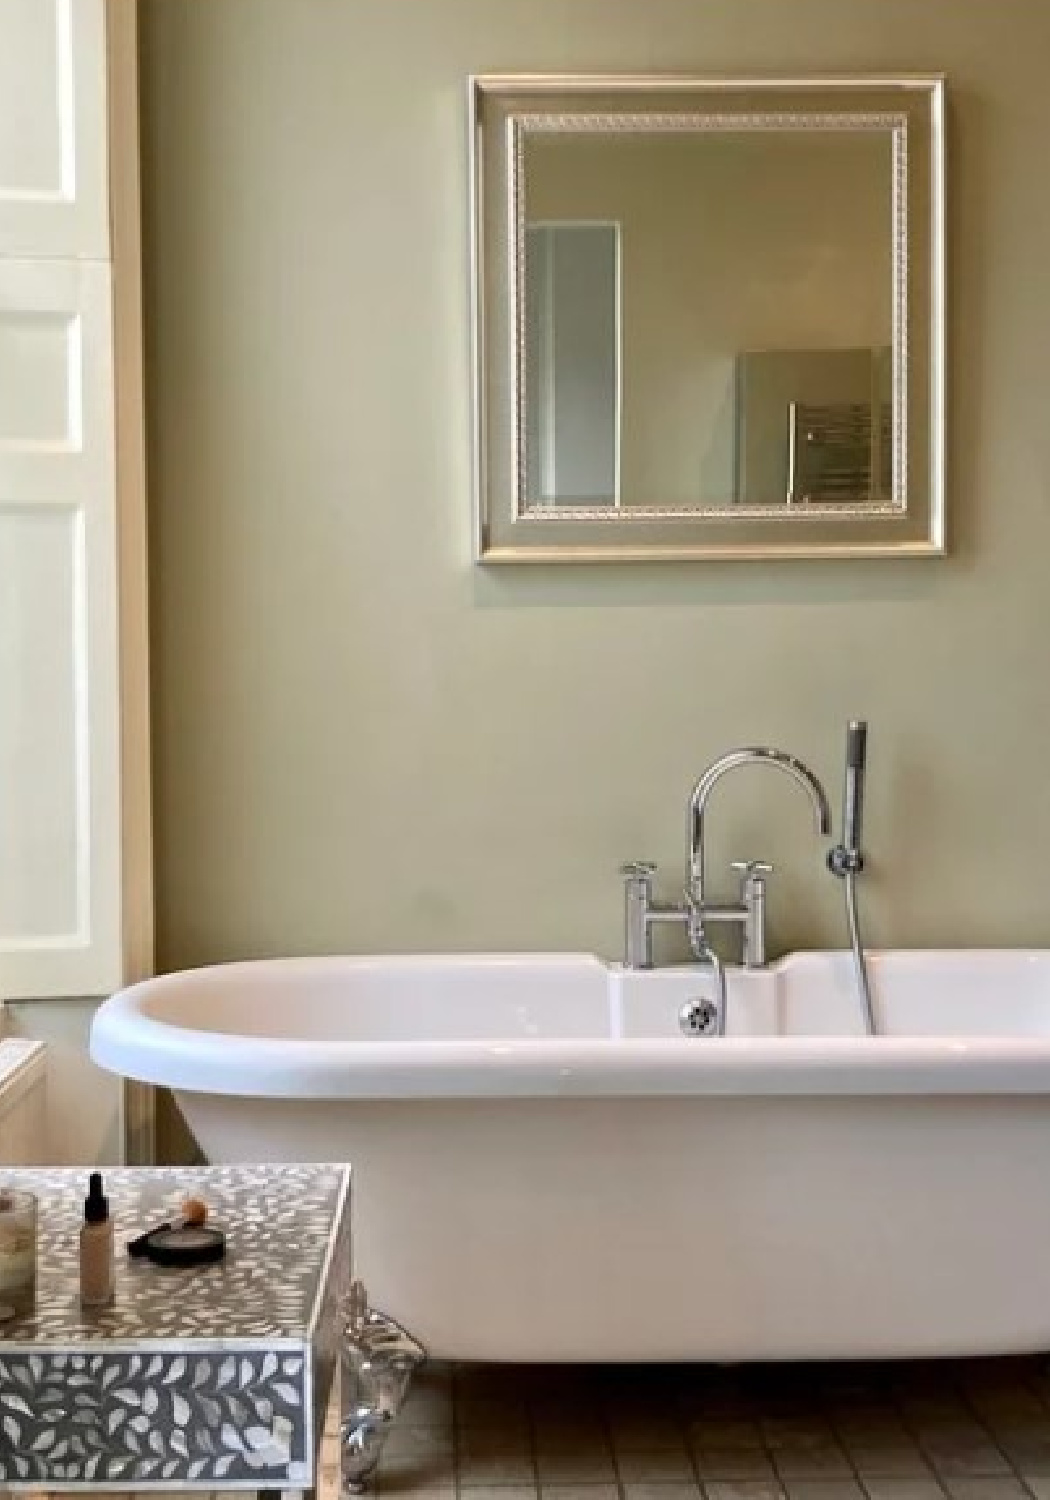 Ball Green paint color (Farrow & Ball) in a classic bathroom with clawfoot tub. #ballgreen